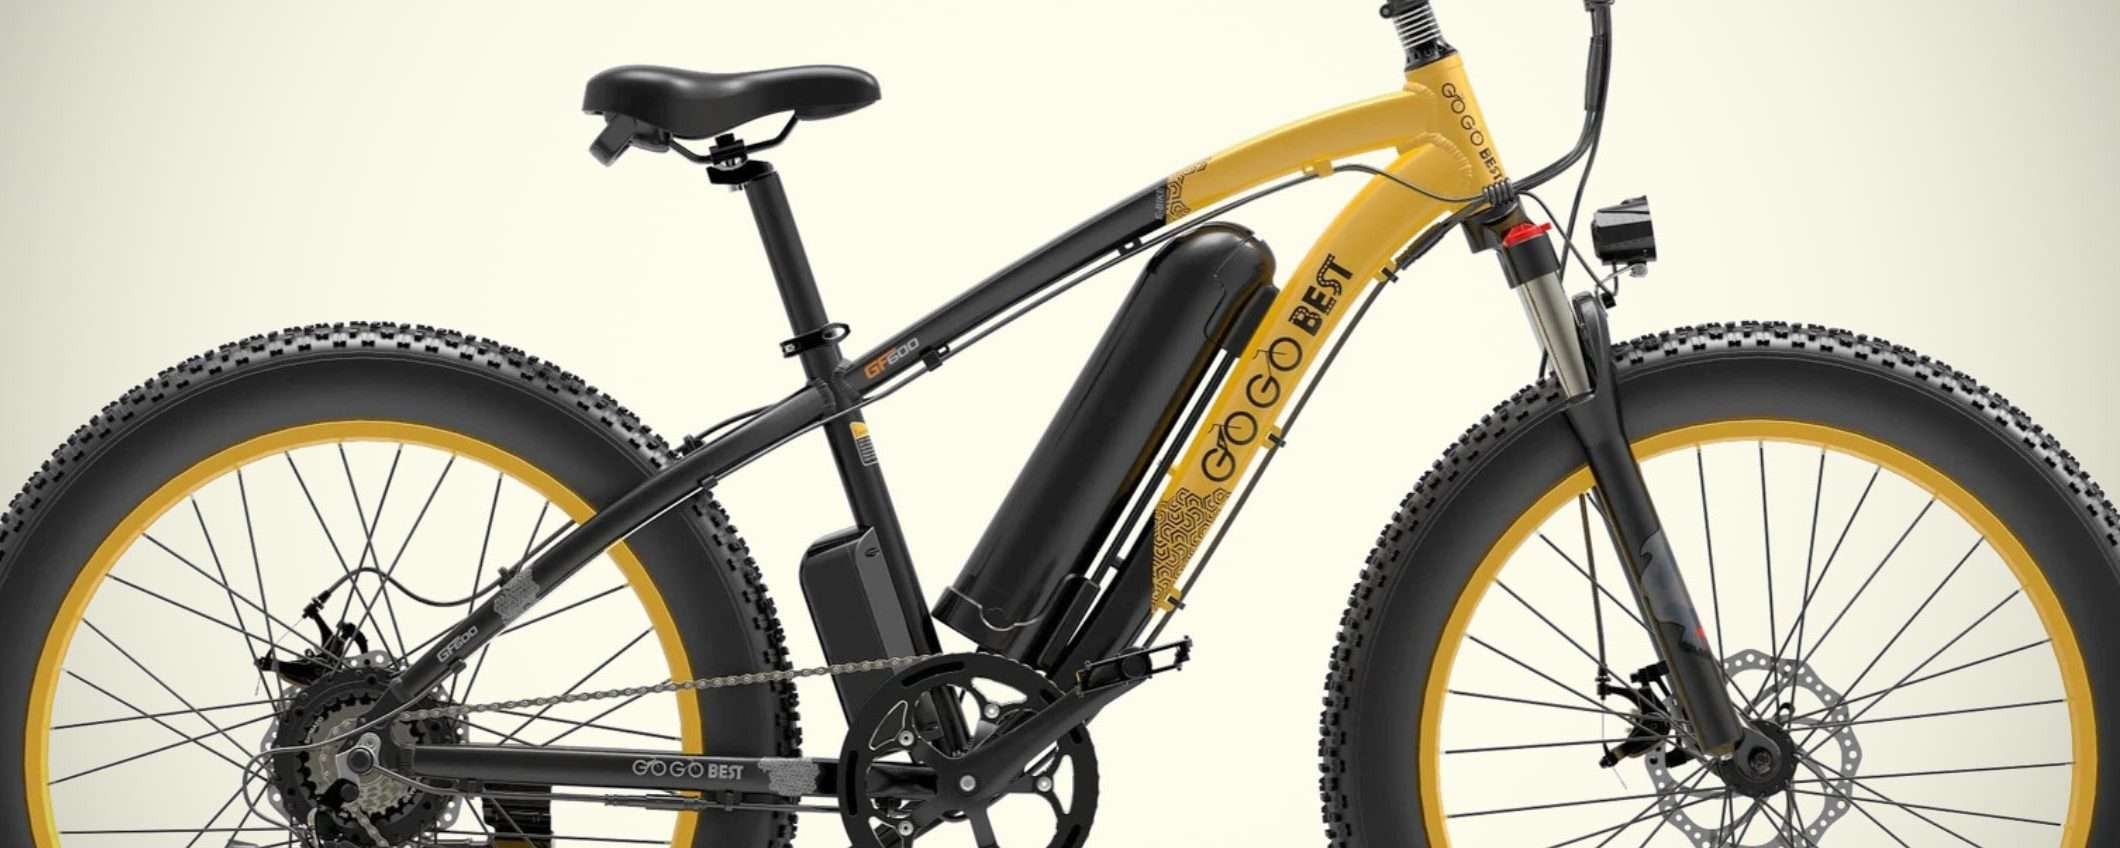 GOGOBEST GF600, la mountain bike elettrica a -340€